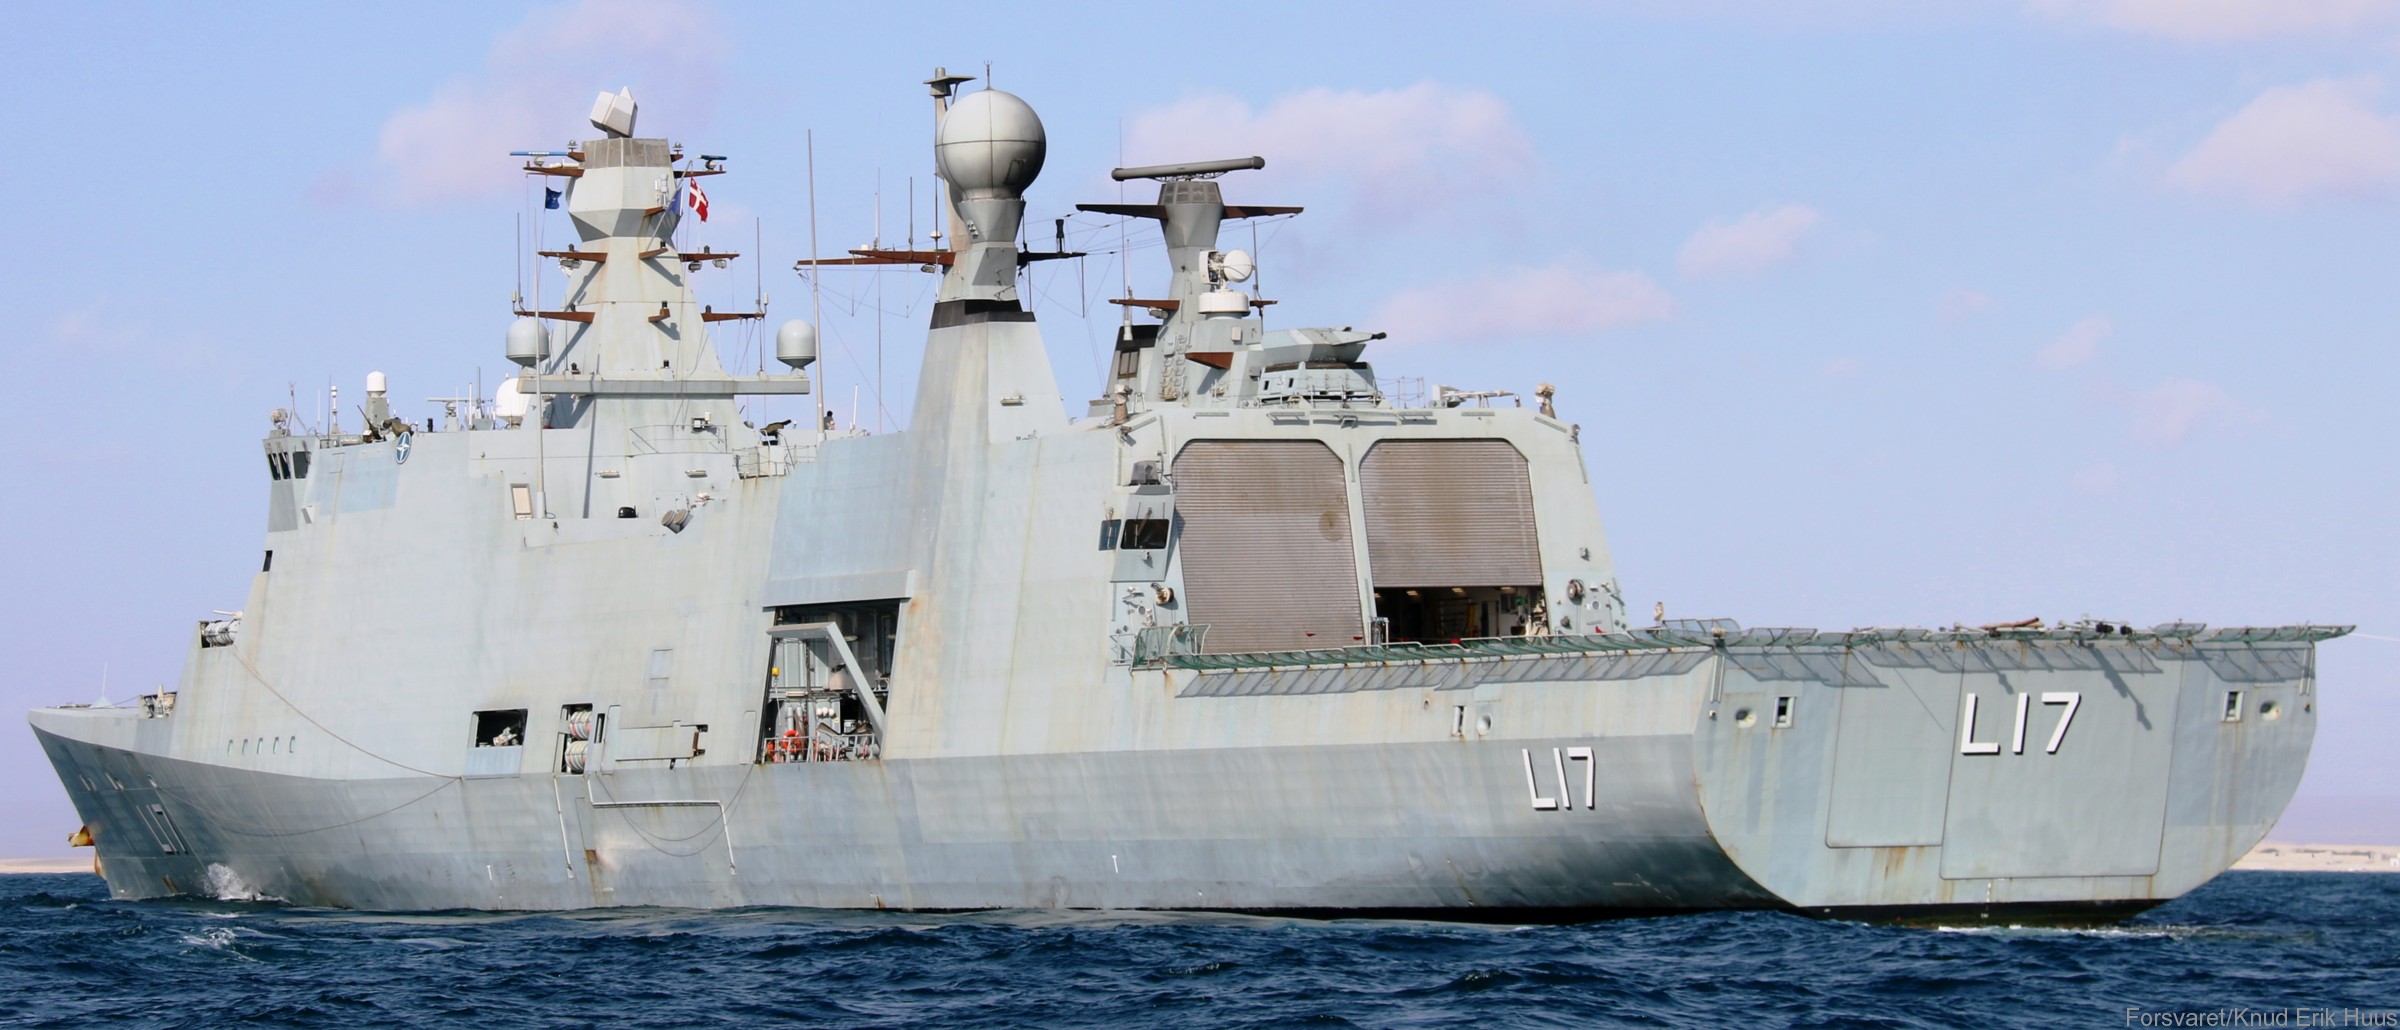 f-342 hdms esbern snare l-17 frigate command support ship royal danish navy 13